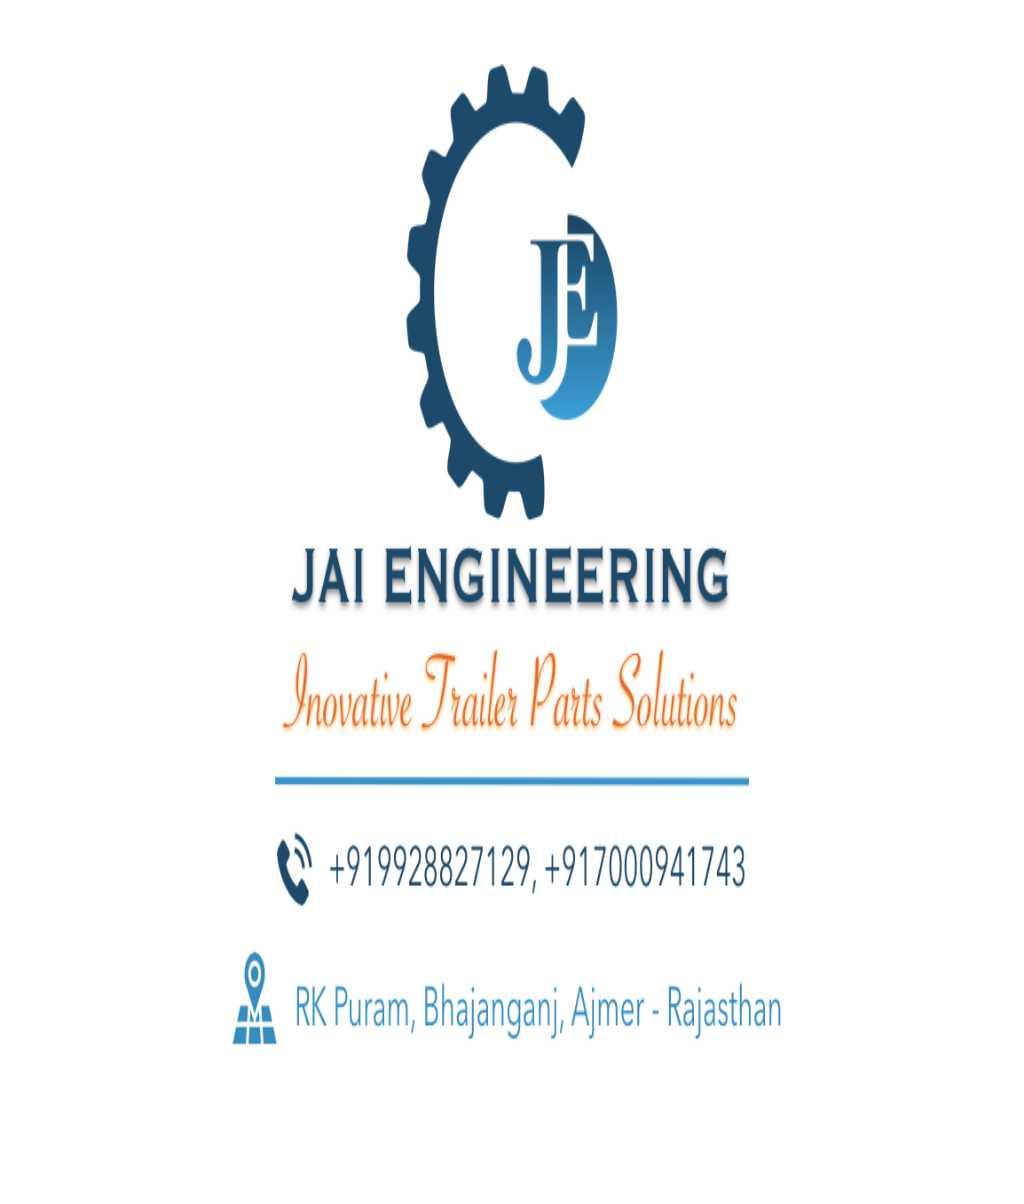 Jai Engineering